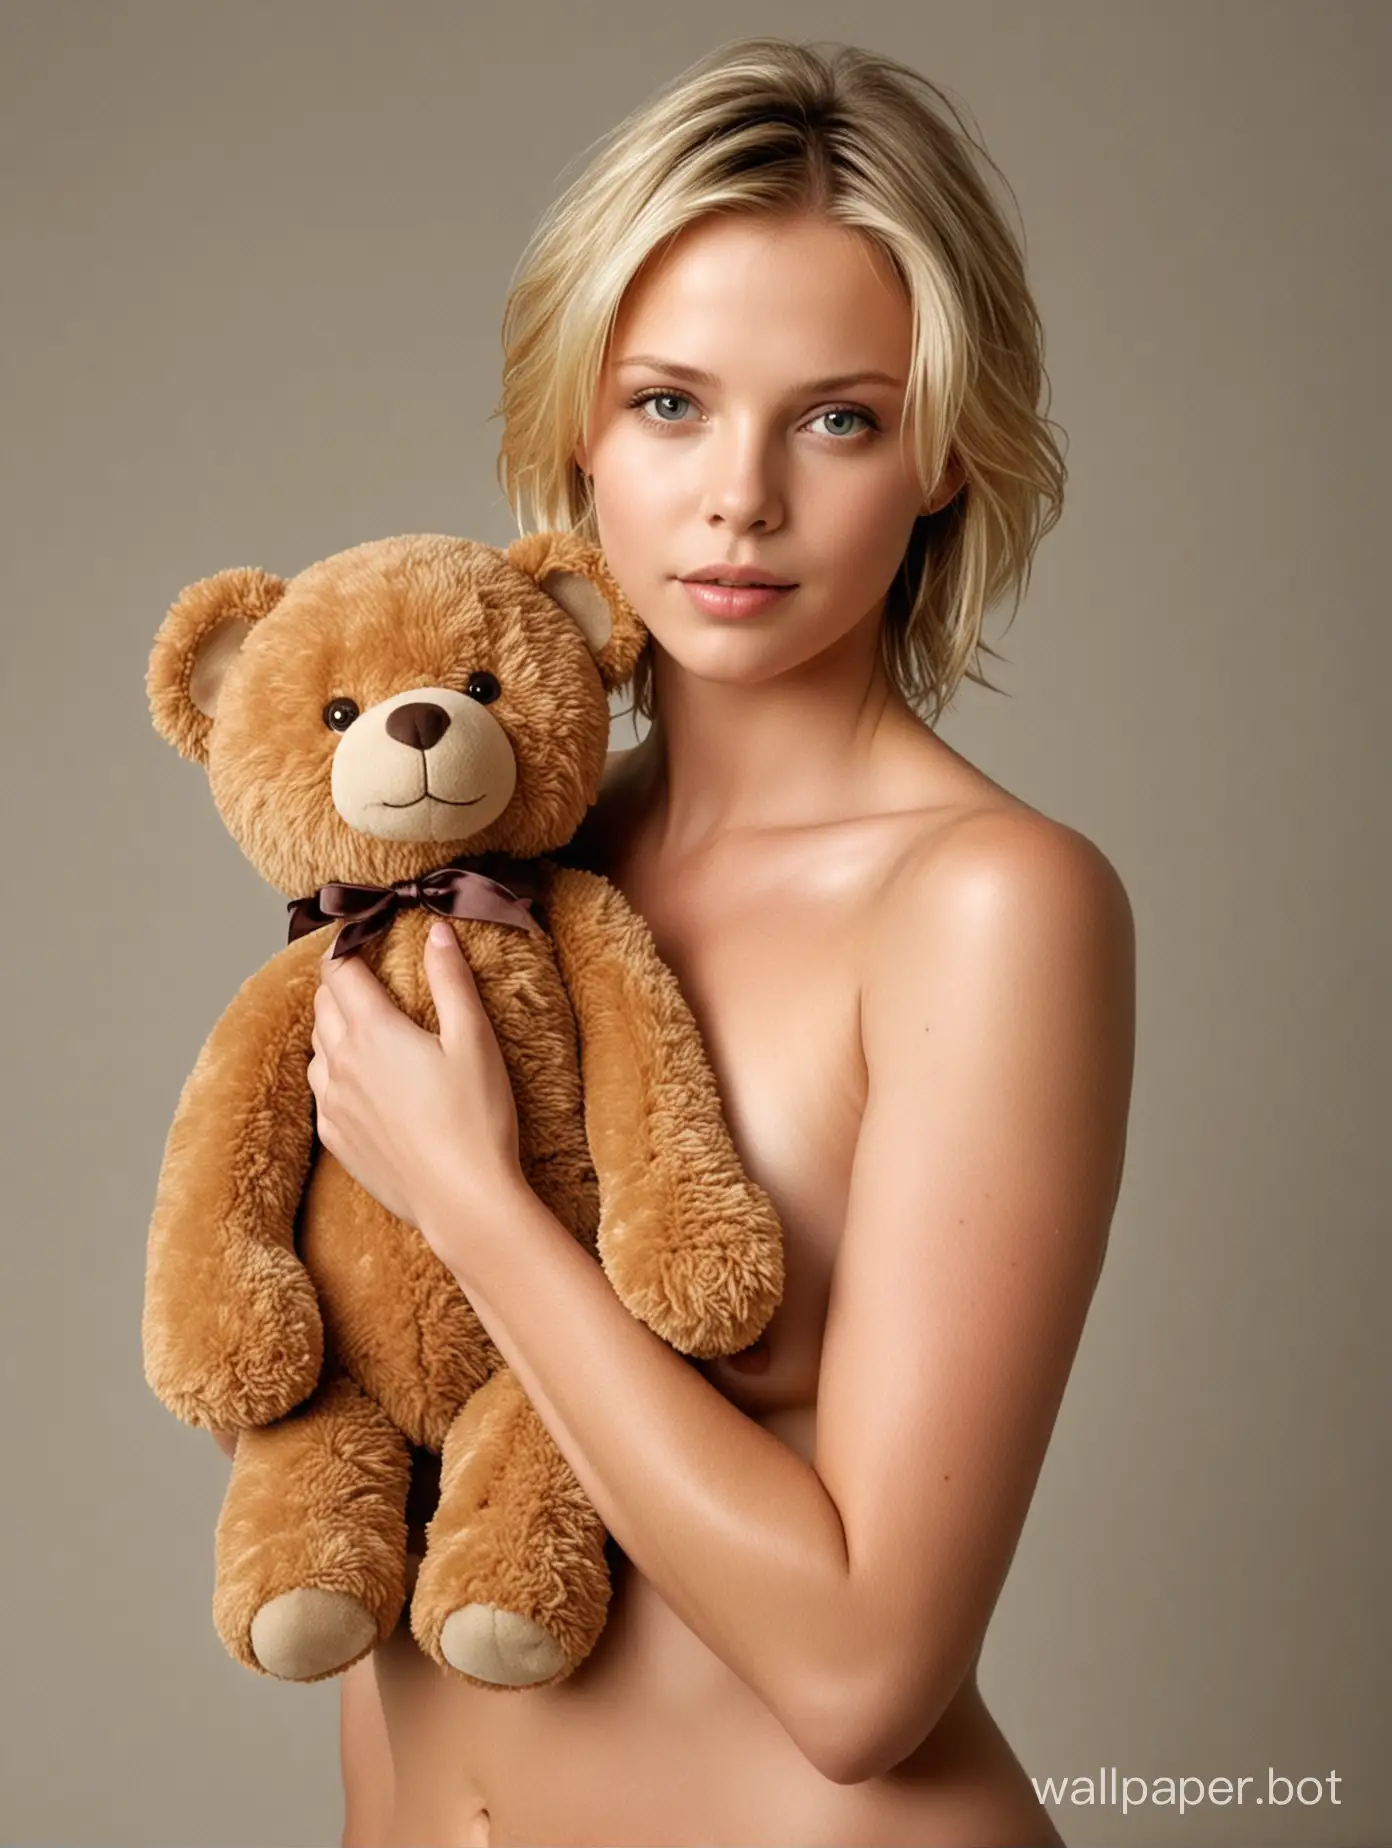 Child-Star-10YearOld-Charlize-Theron-Lookalike-with-Teddy-Bear